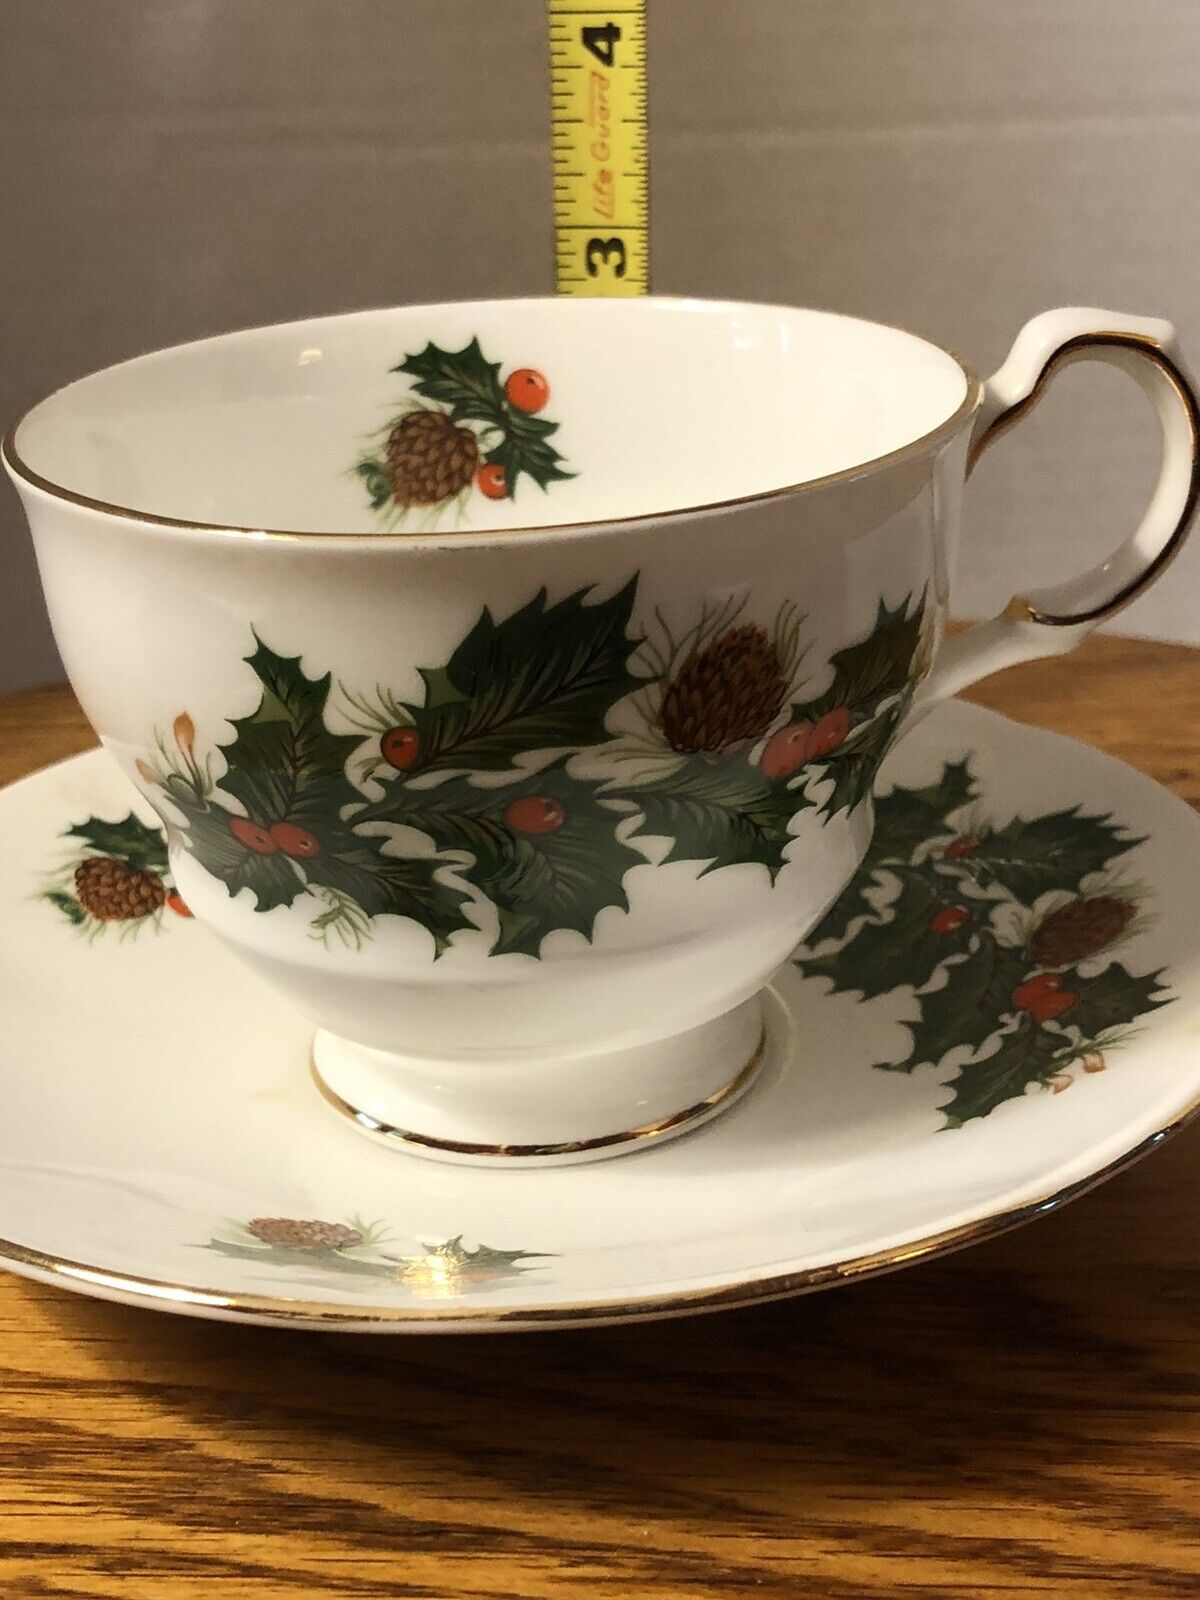 Vintage Royal Crest Fine Bone China Teacup And Saucer. Made In England.